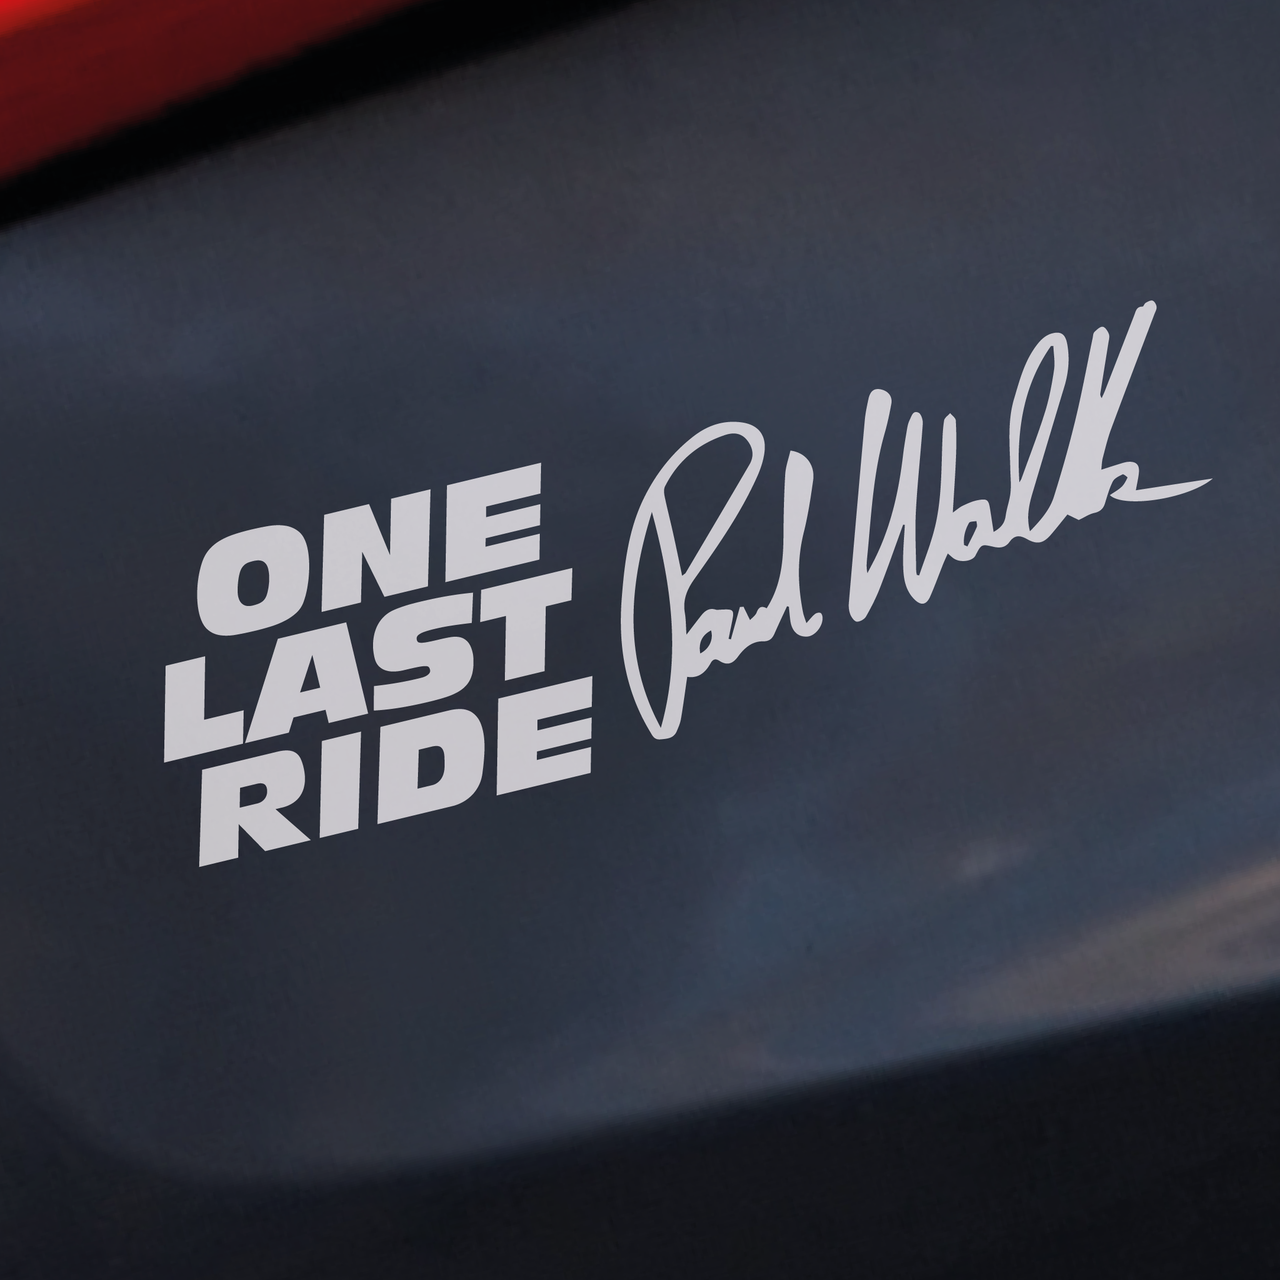 Paul Walker - One Last Ride Car Decal